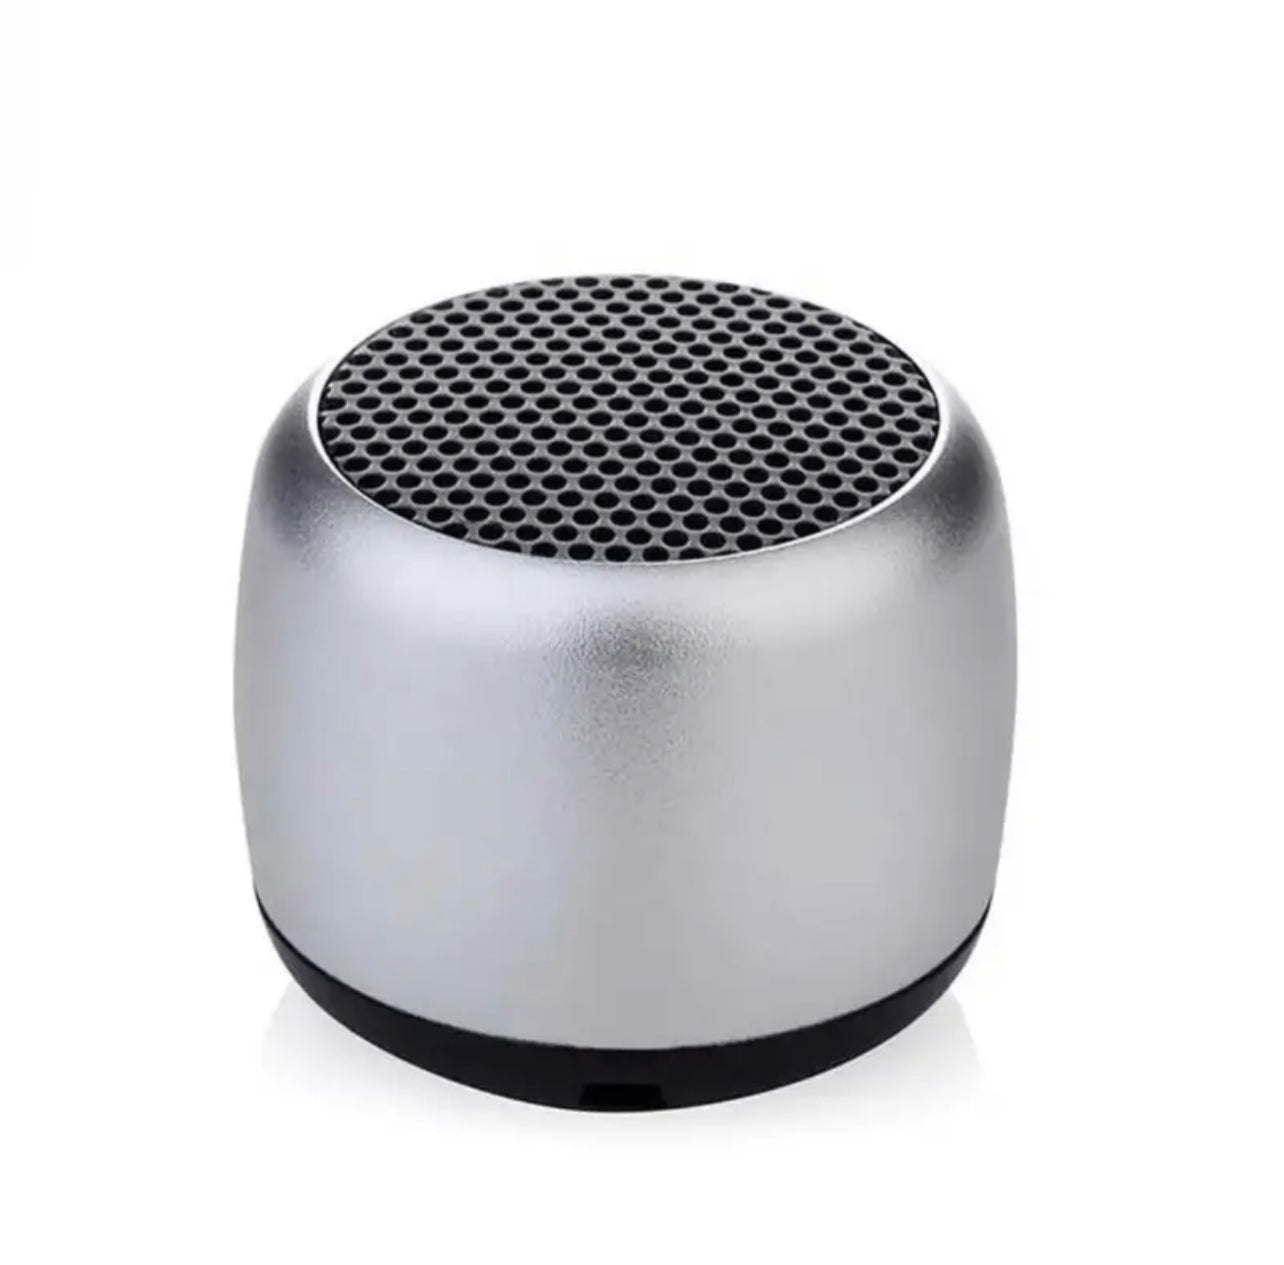 Croc charm Bluetooth speaker (silver)